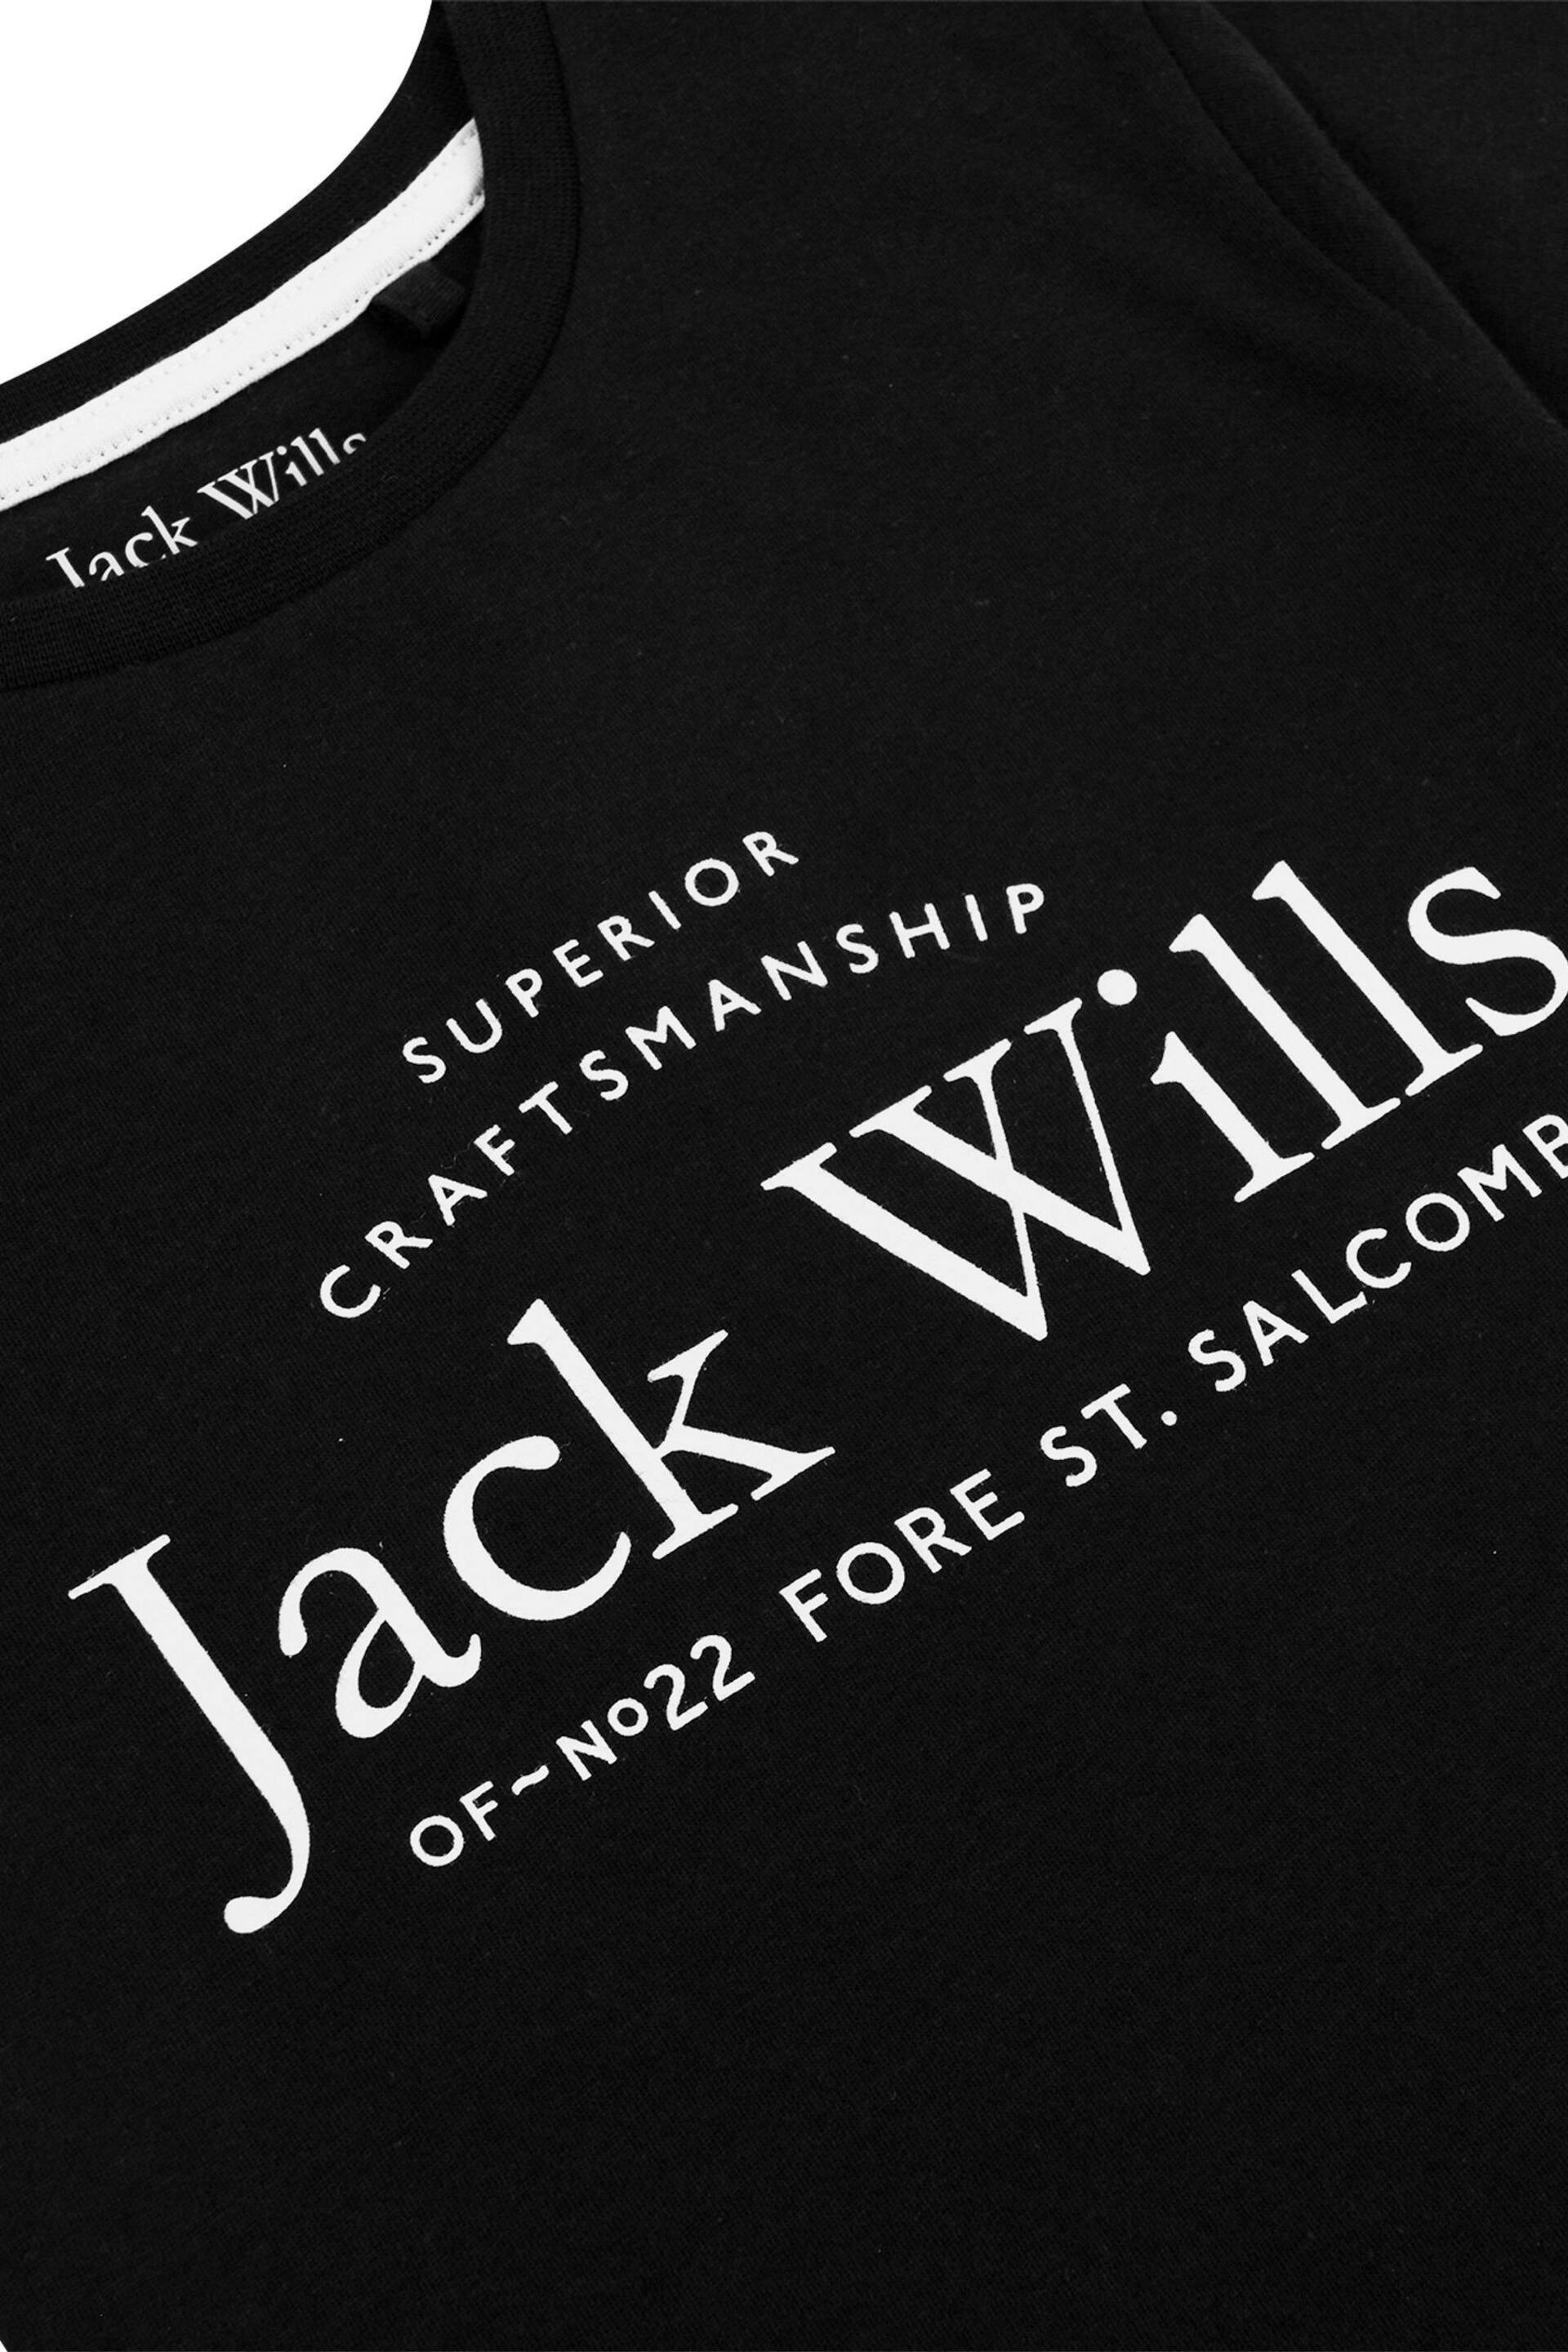 Jack Wills Classic Crew Neck Black T-Shirt - Image 3 of 3